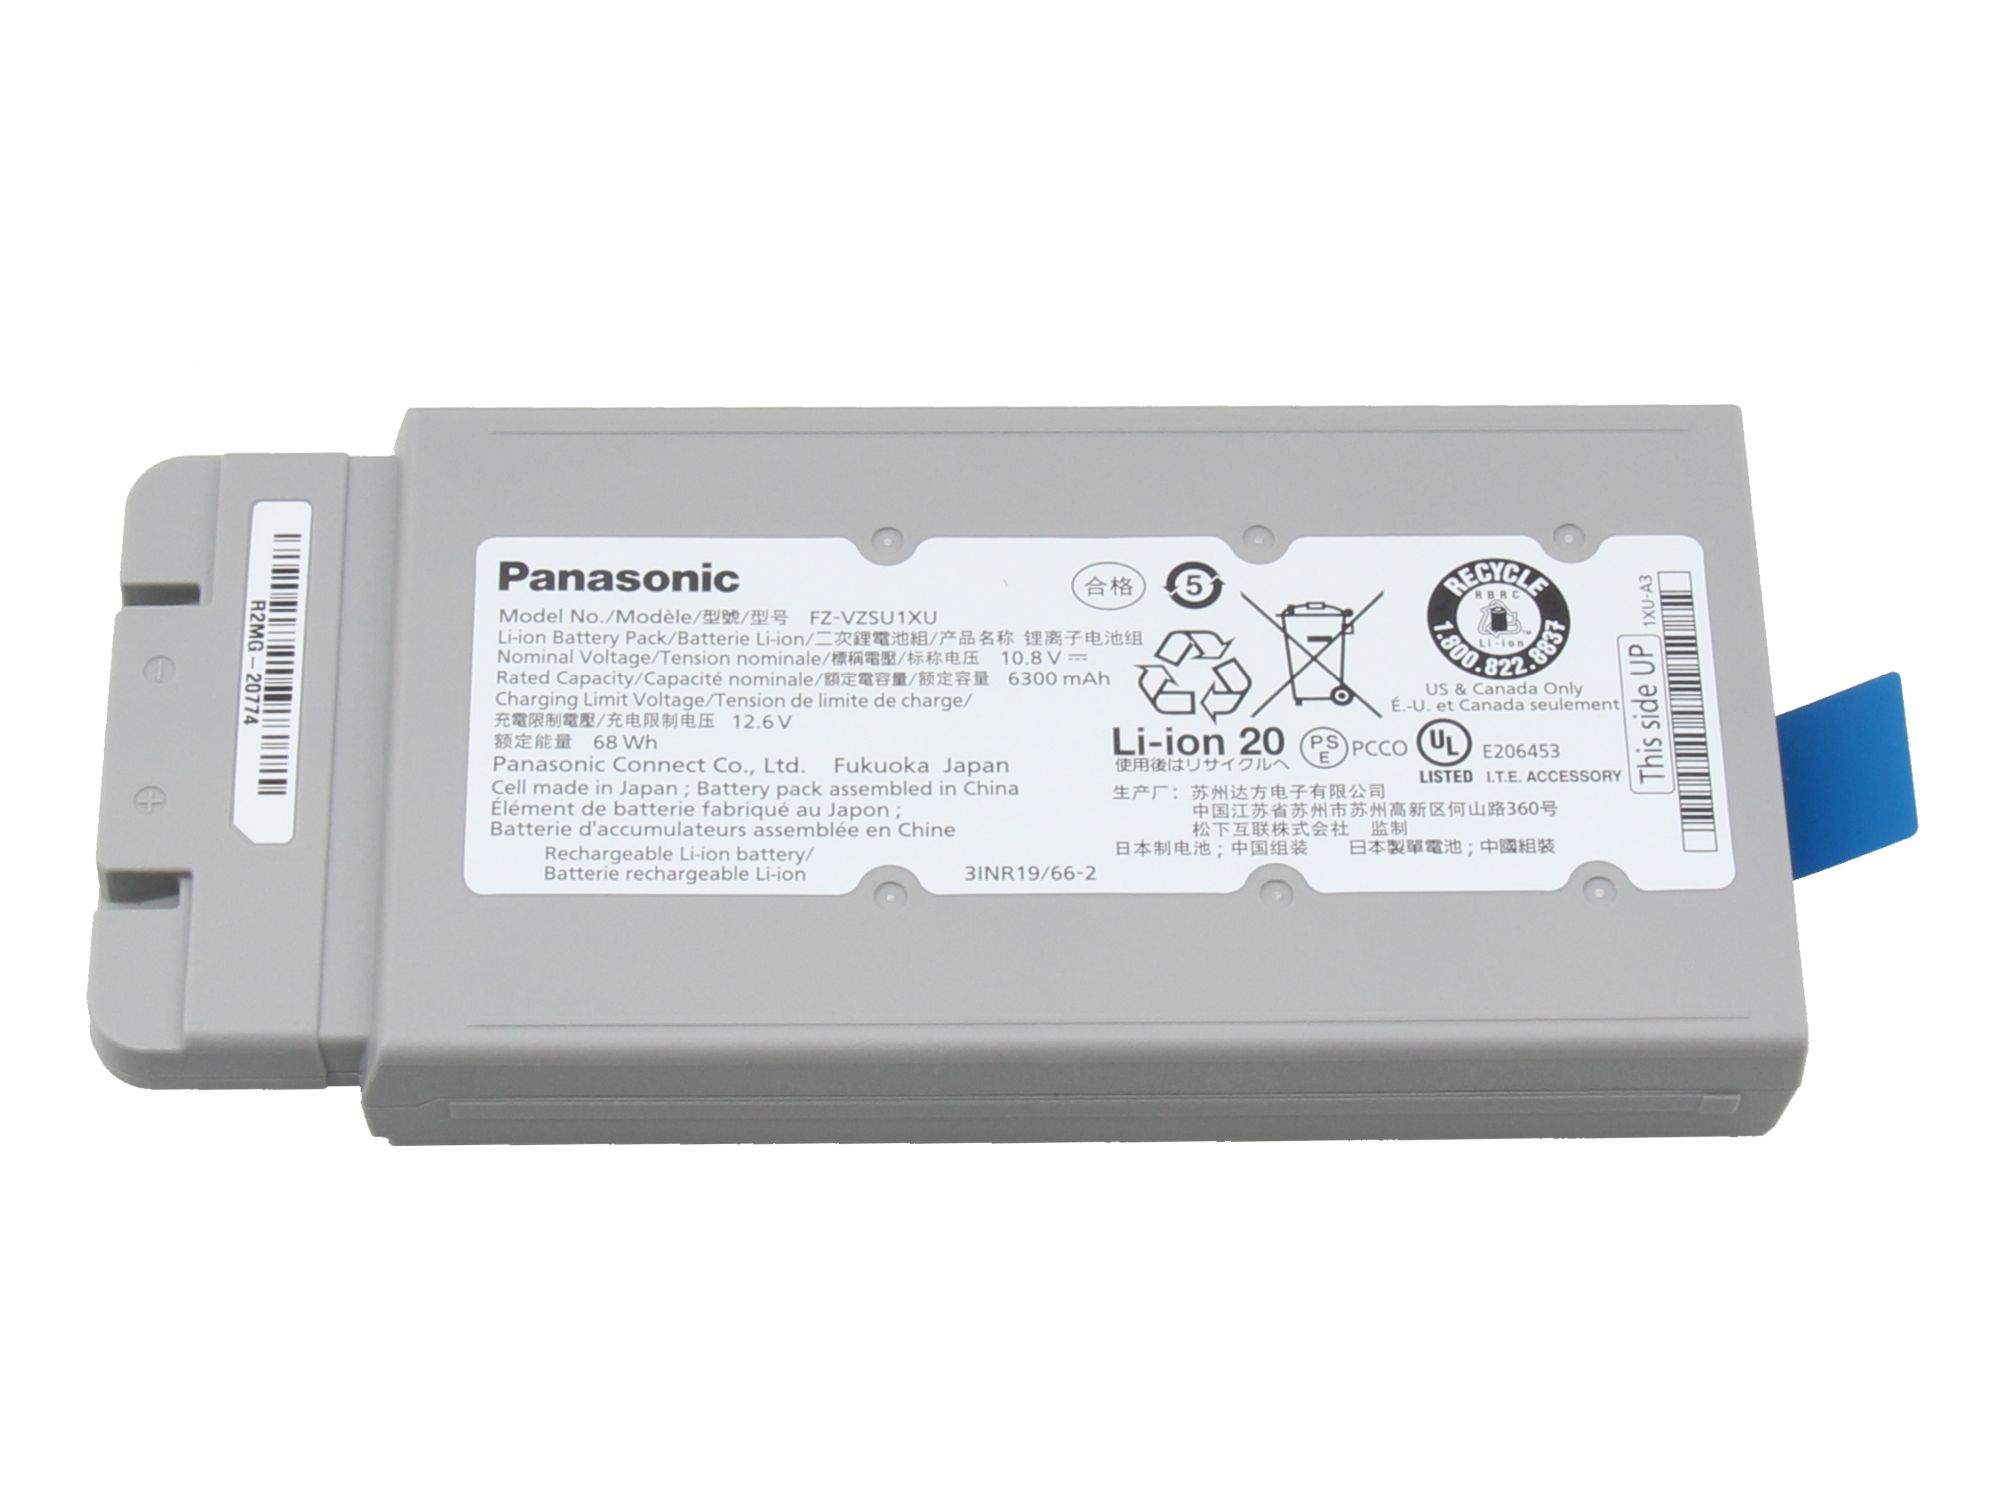 PANASONIC Notebook Spare Part Battery